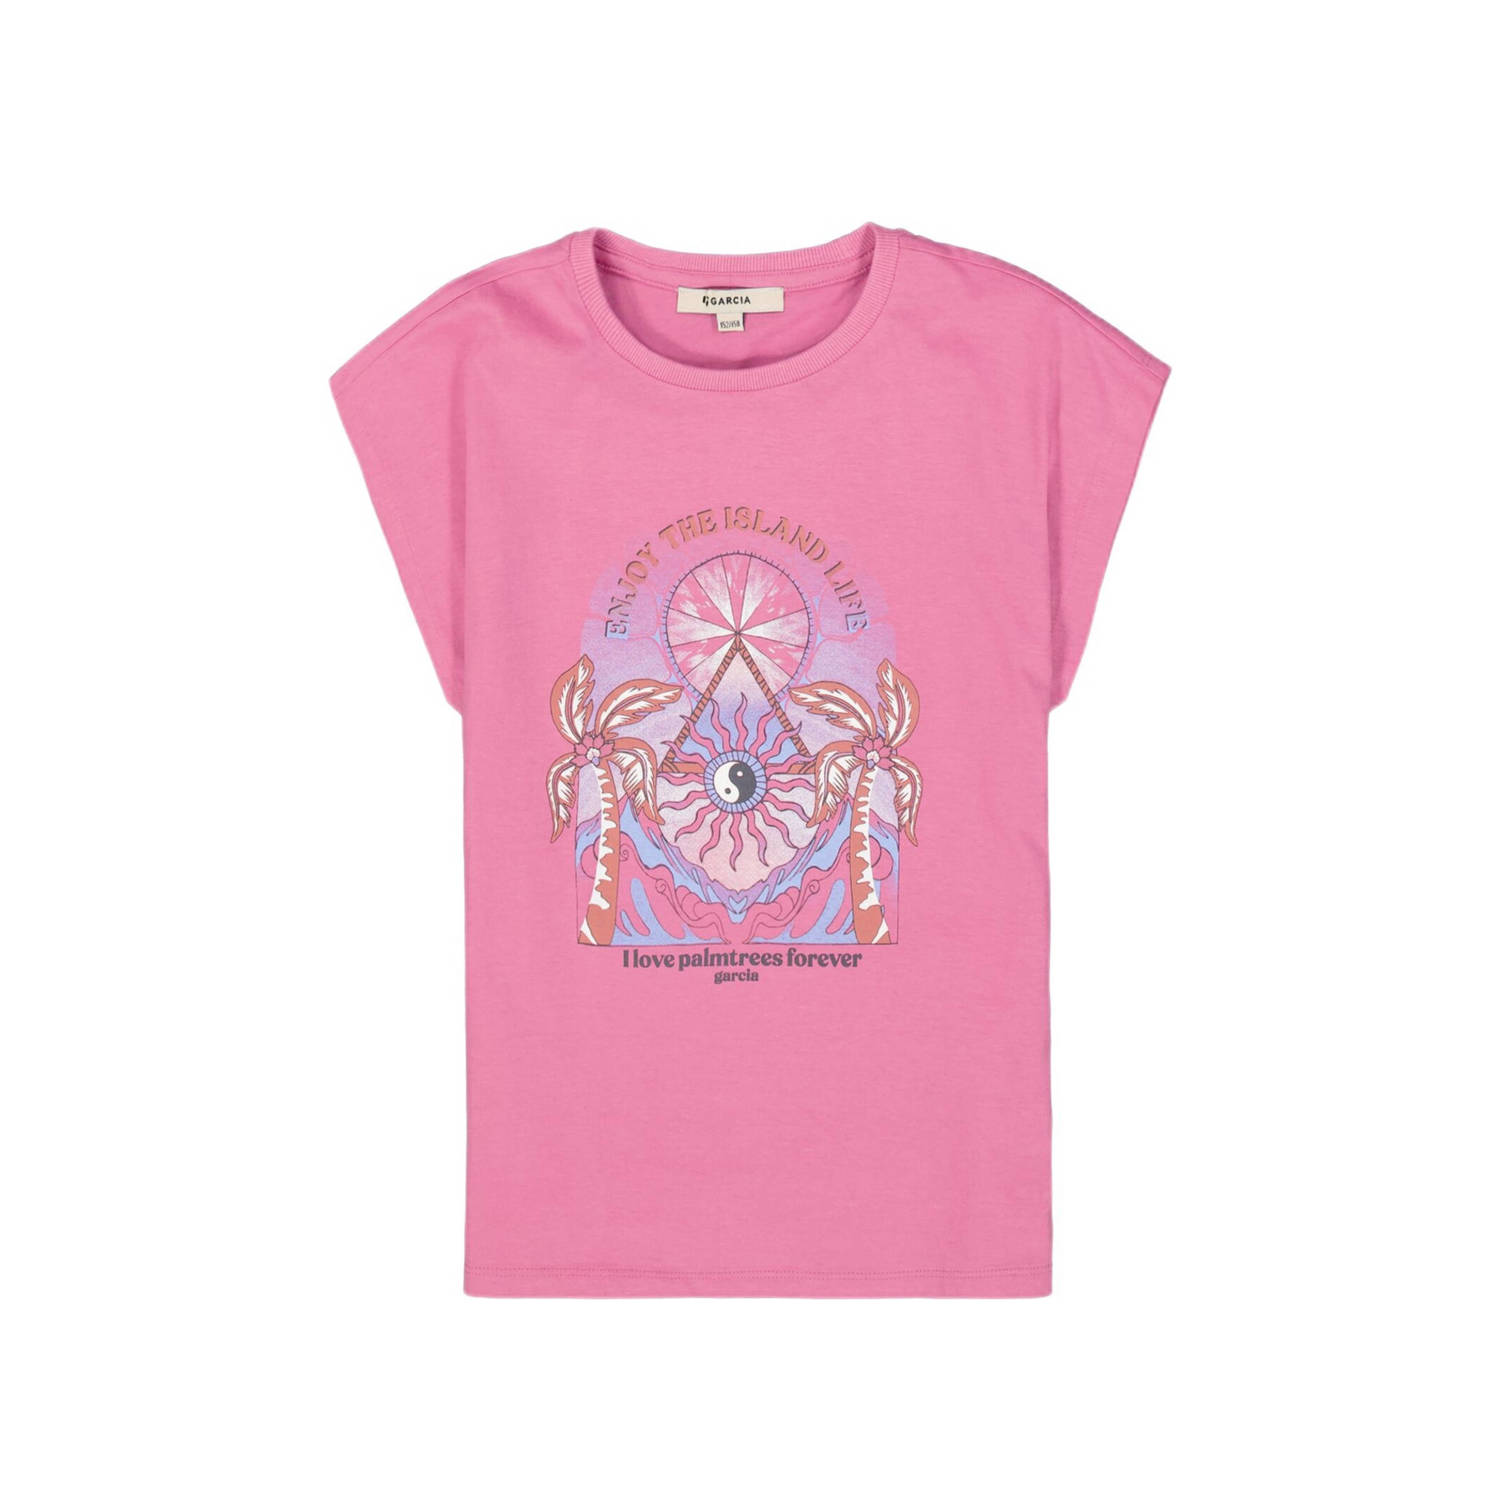 Garcia T-shirt met printopdruk roze lila